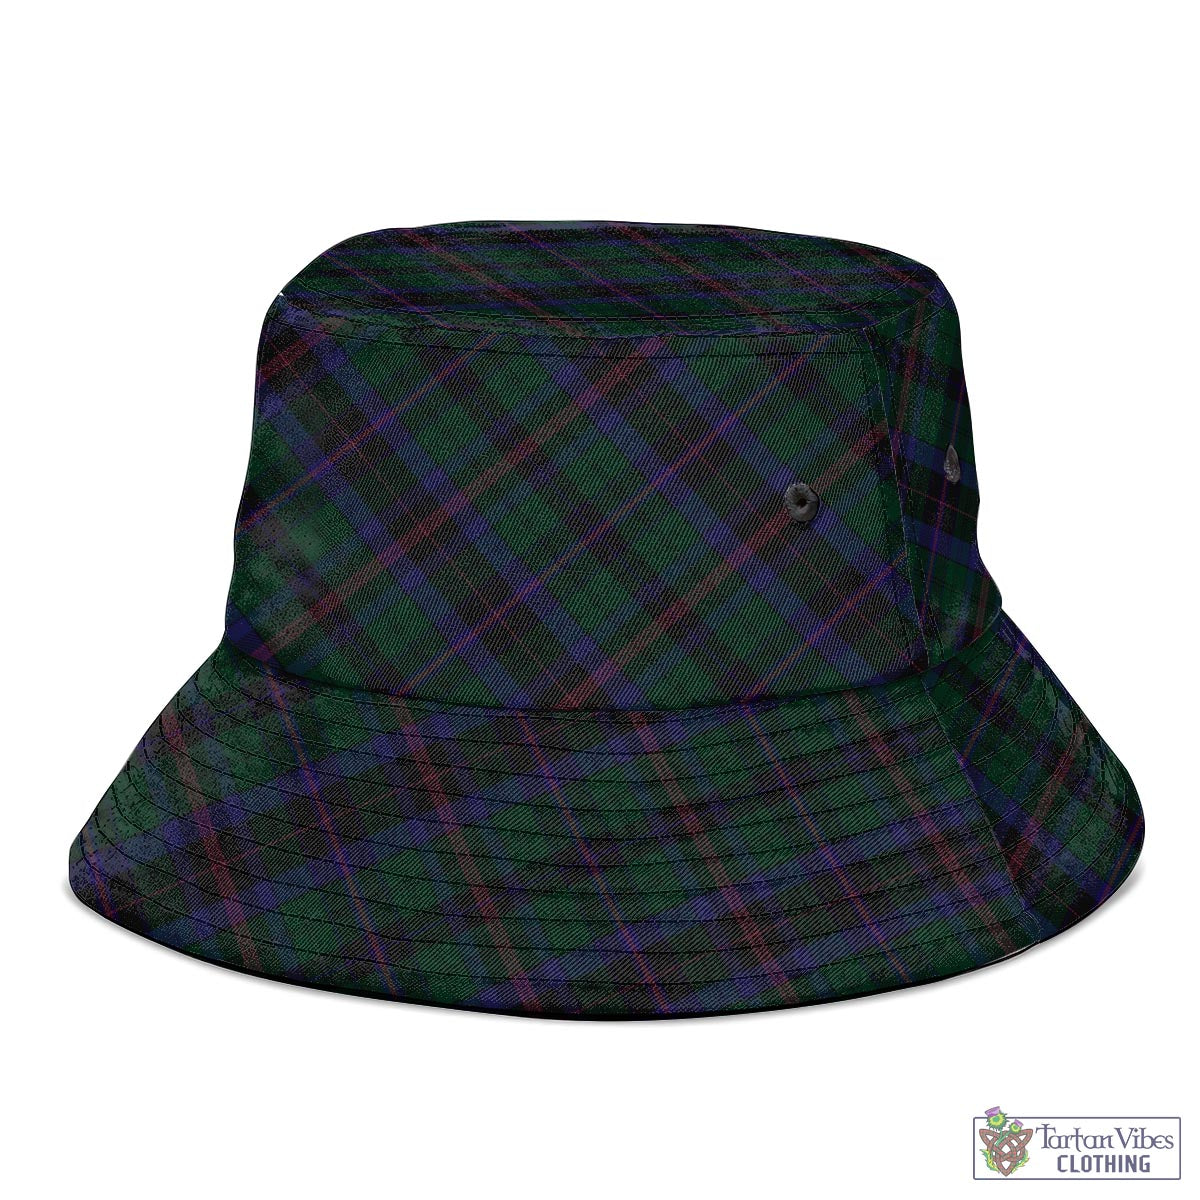 Tartan Vibes Clothing Phillips of Wales Tartan Bucket Hat